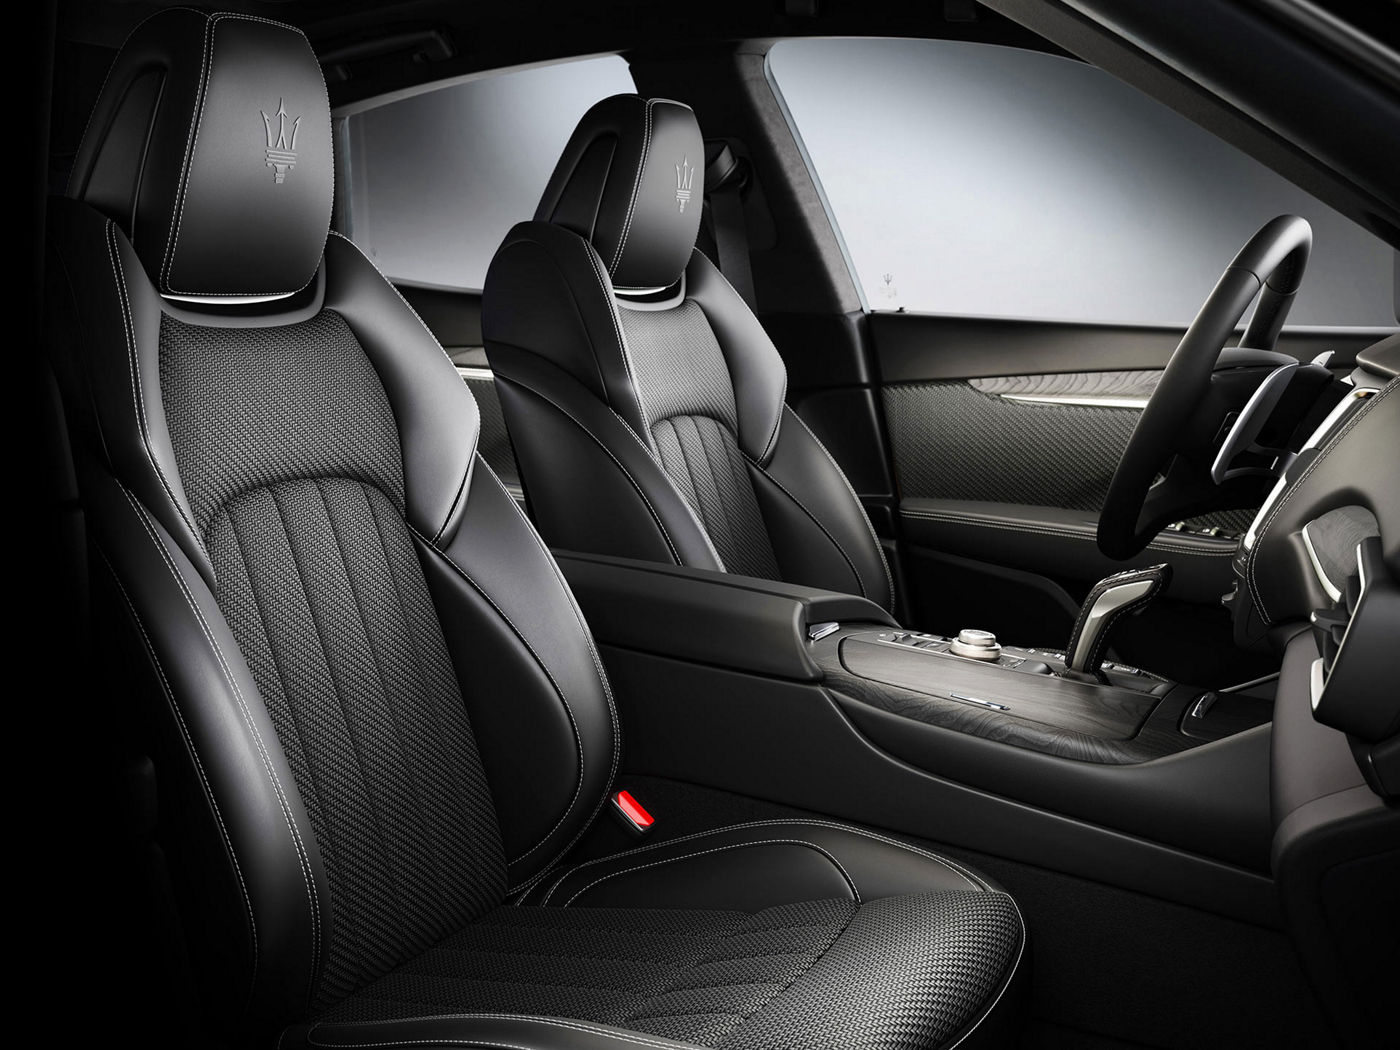 Maserati Zegna Pelletessuta interiors - Front seats and gearbox